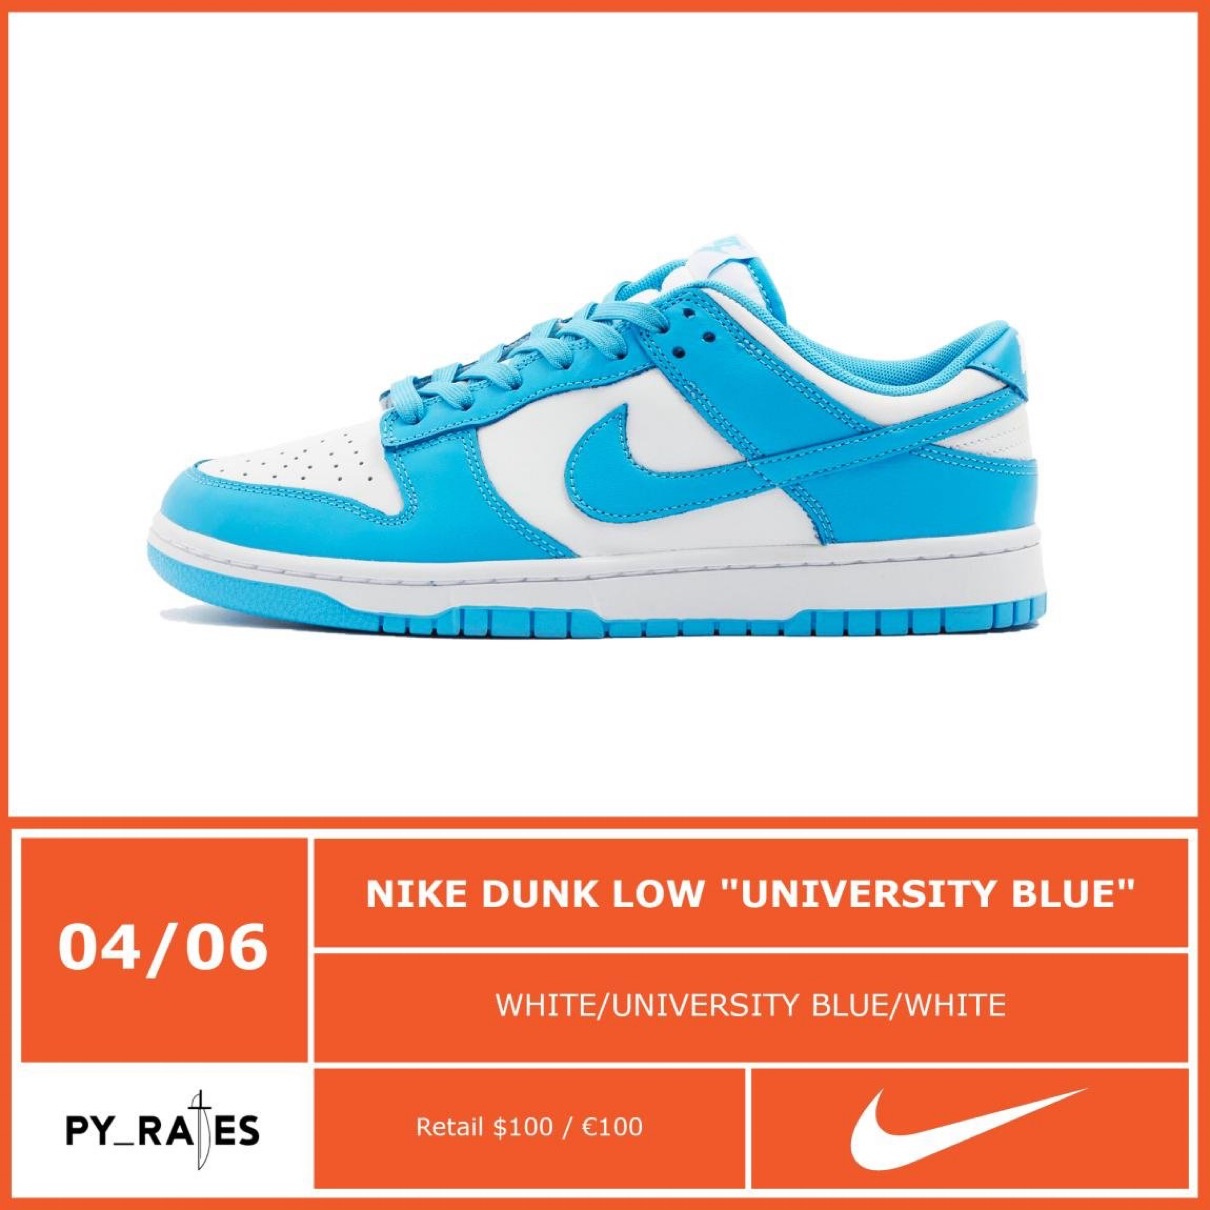 Nike】Dunk Low Retro “University Blue”が国内5月3日/5月6日に発売 